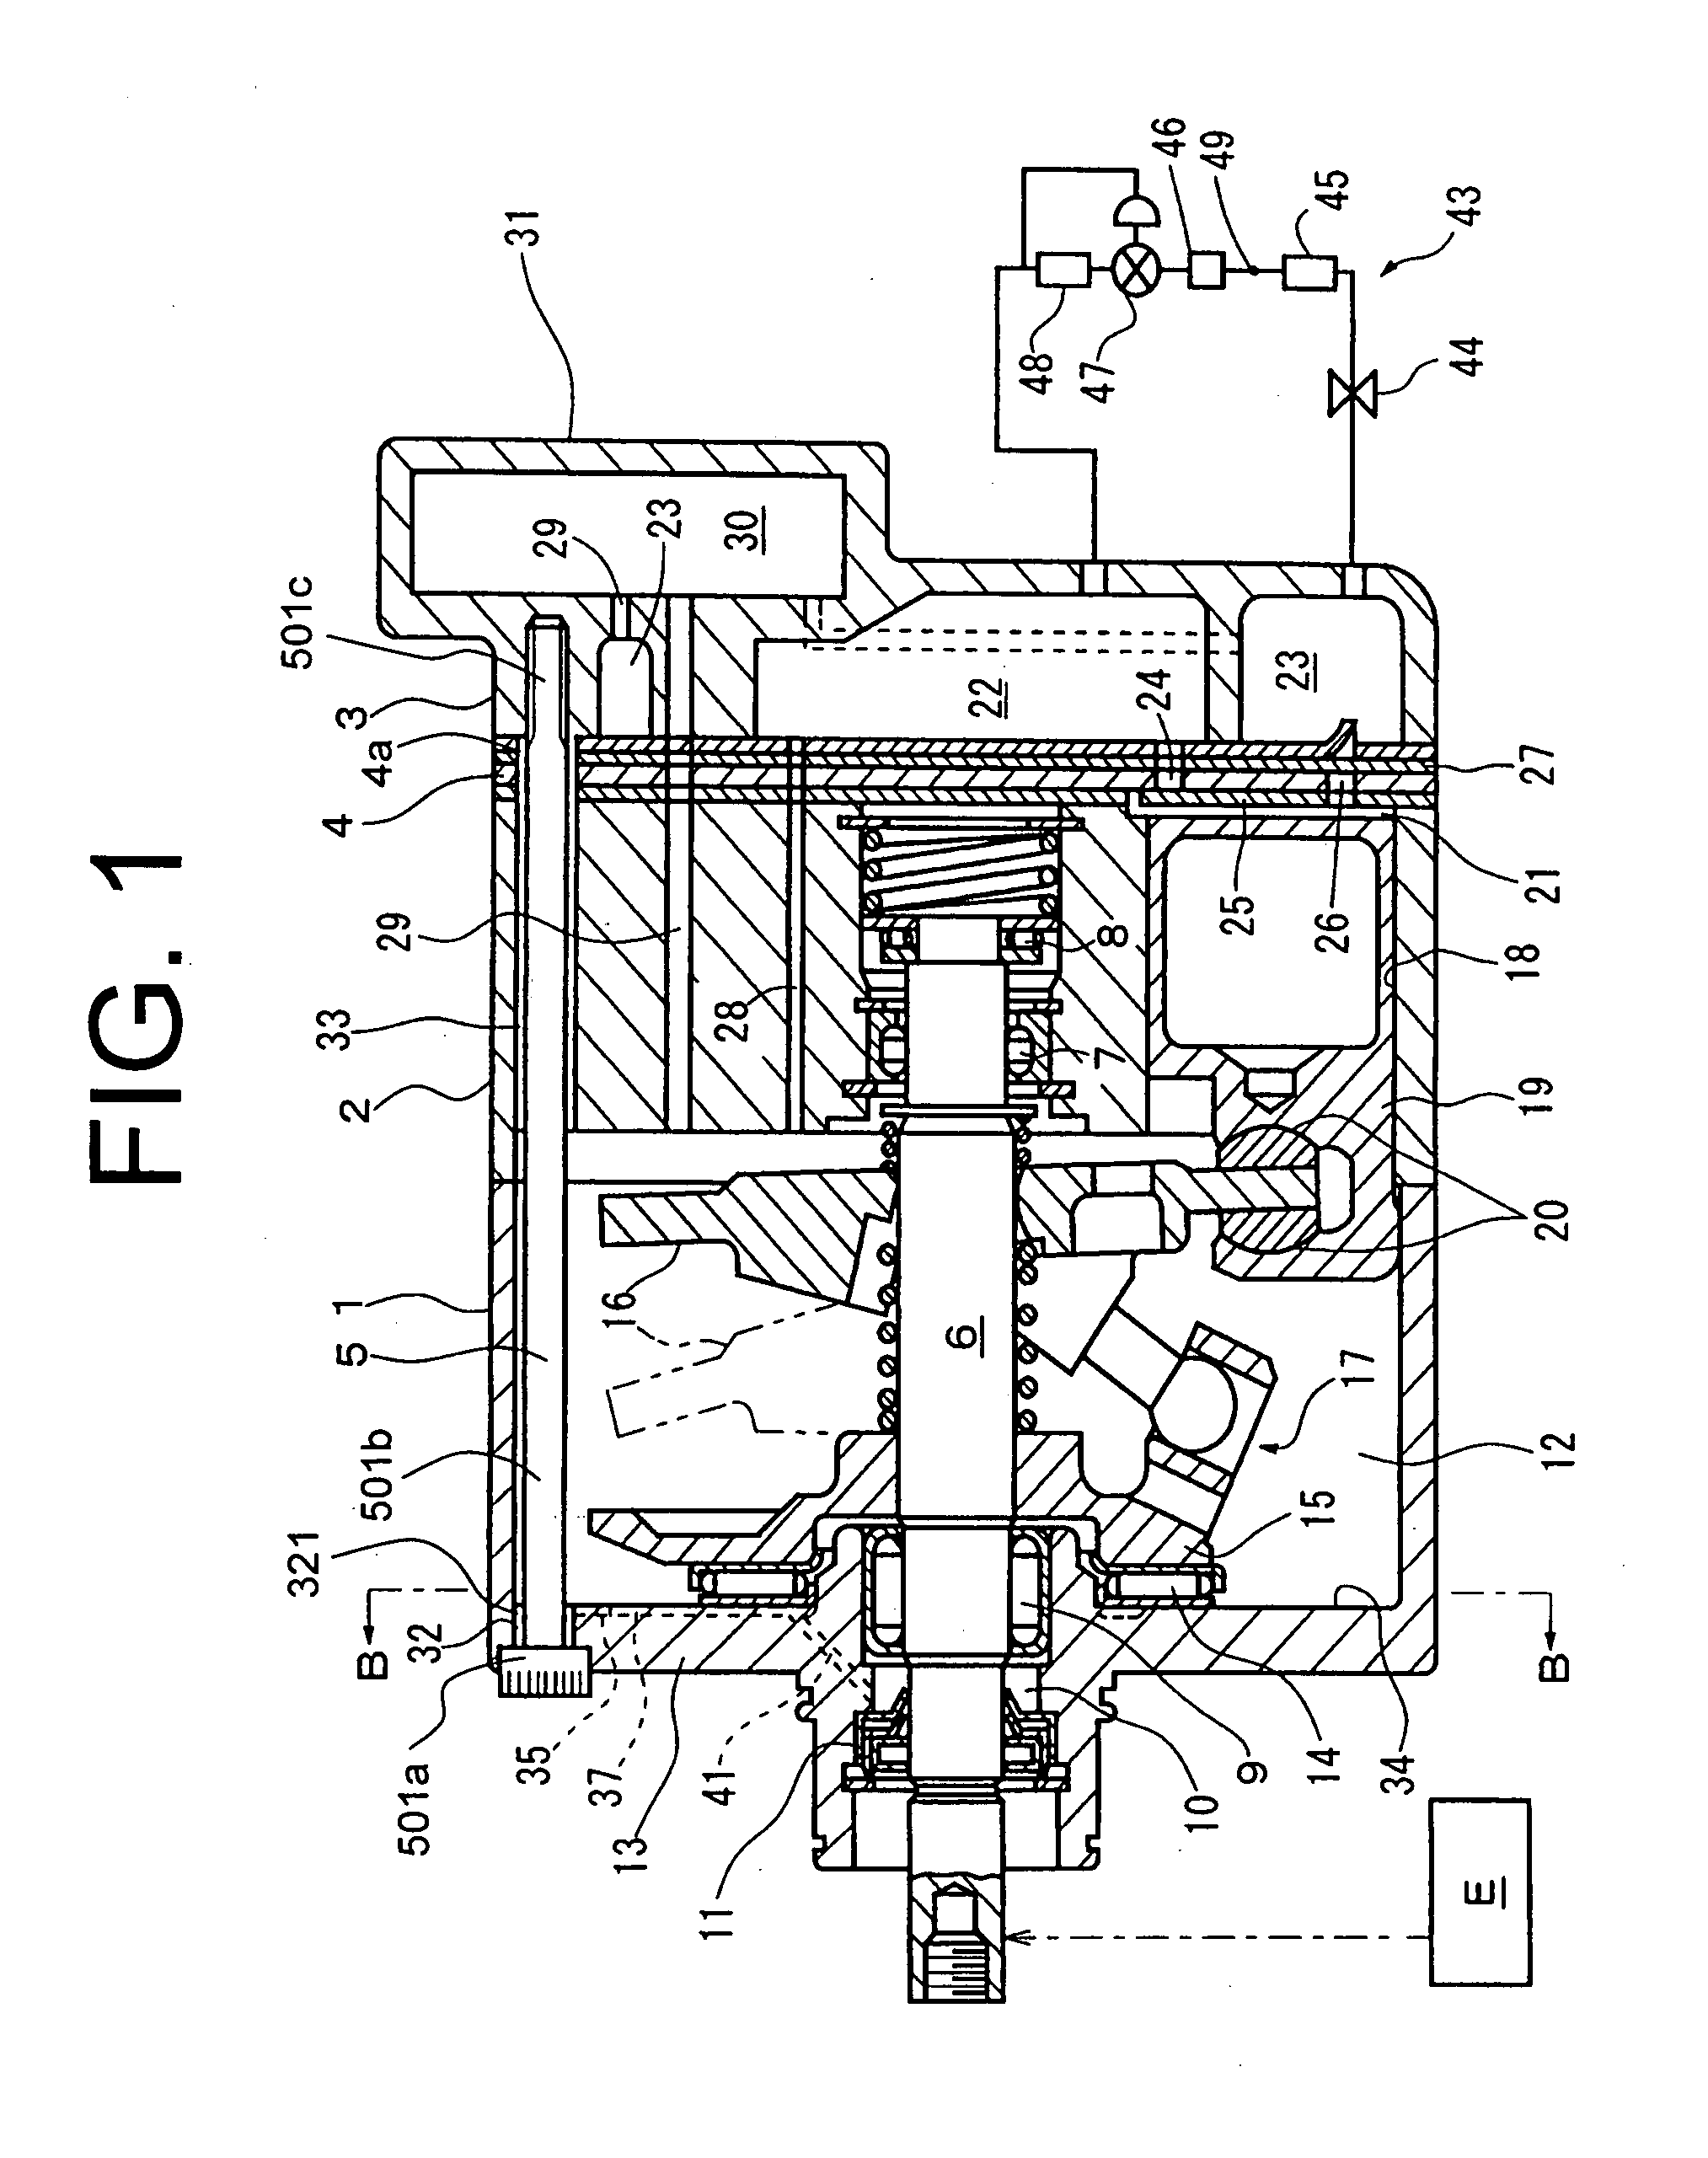 Lubricating oil feeding mechanism in a swash type compressor